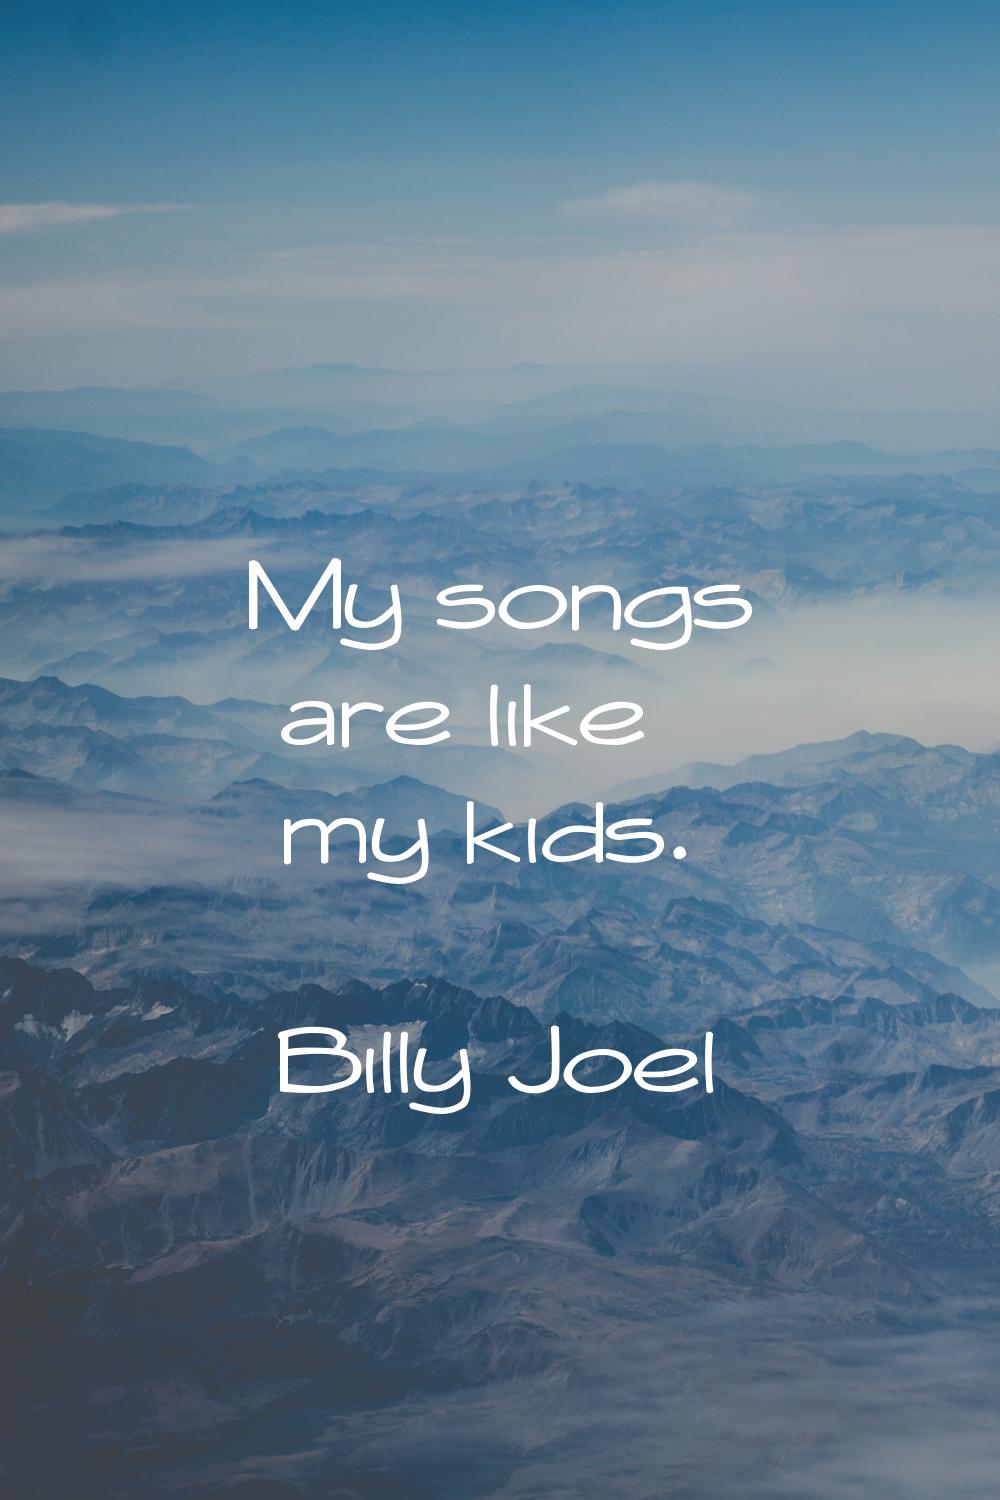 My songs are like my kids.